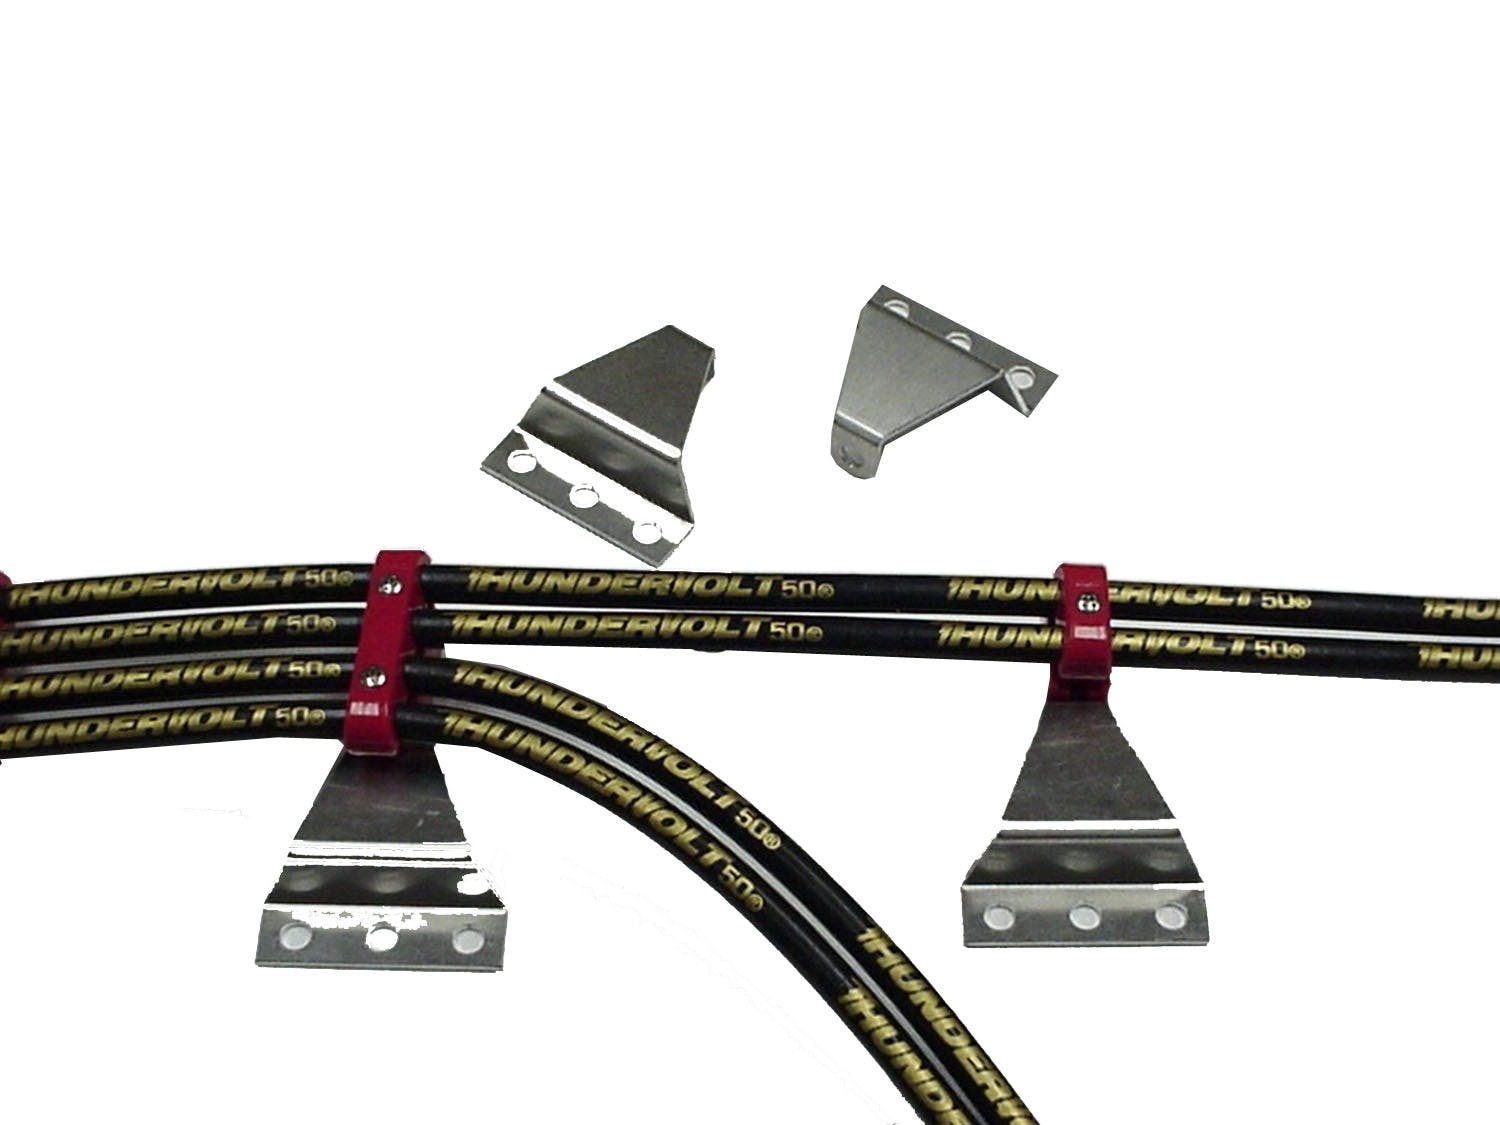 Taylor Cable Products 42600 Aluminum Side Mount Brackets 4/Pkg